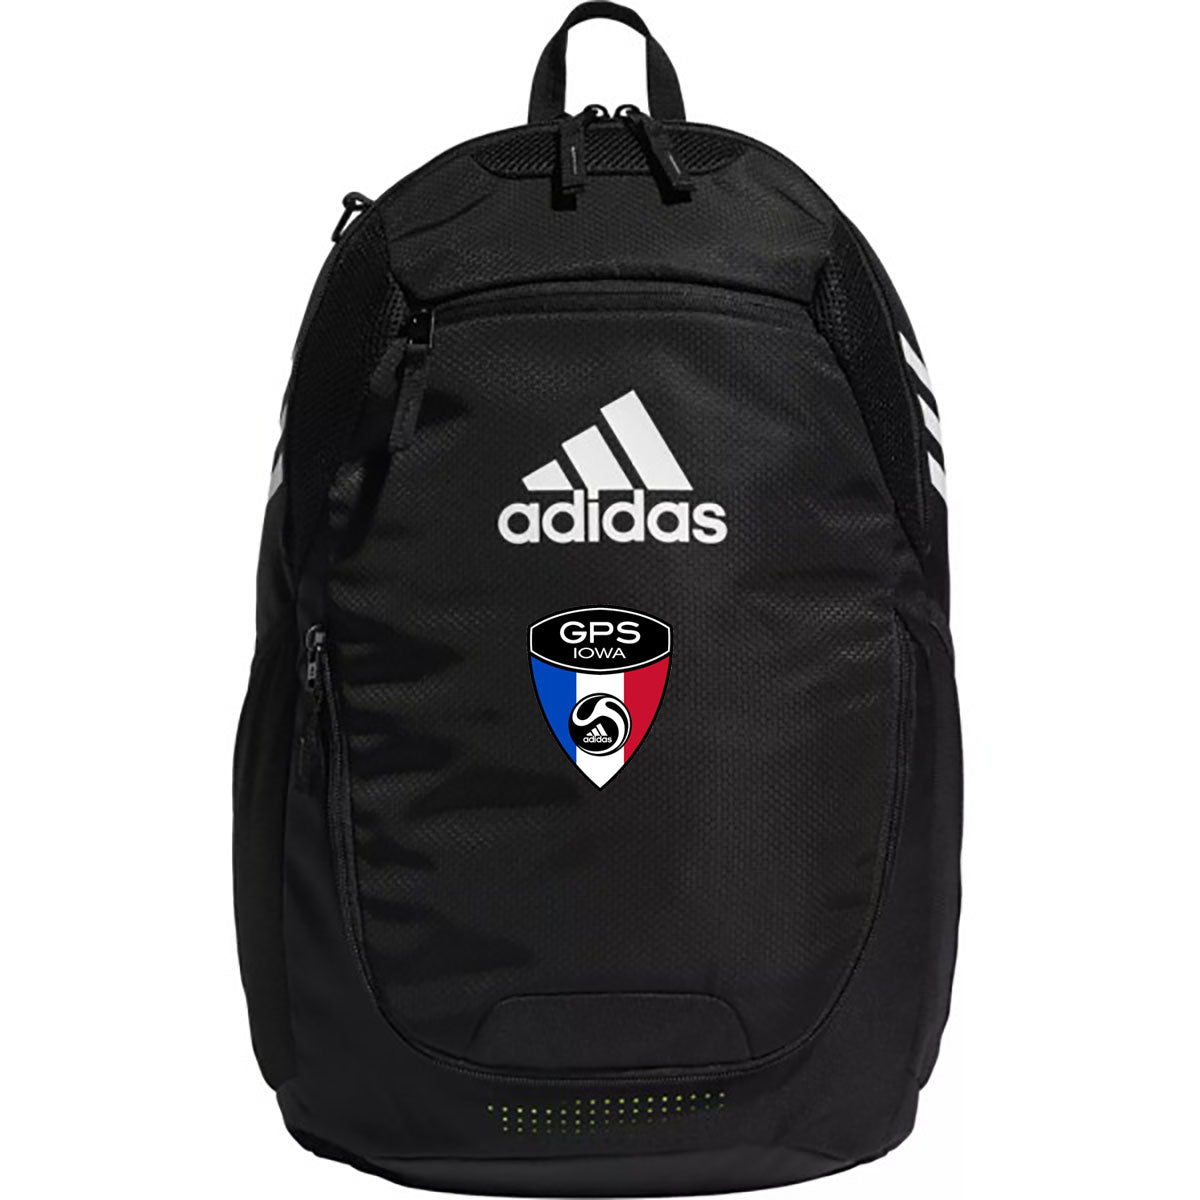 GPS adidas Stadium III Backpack Bags Adidas Black 